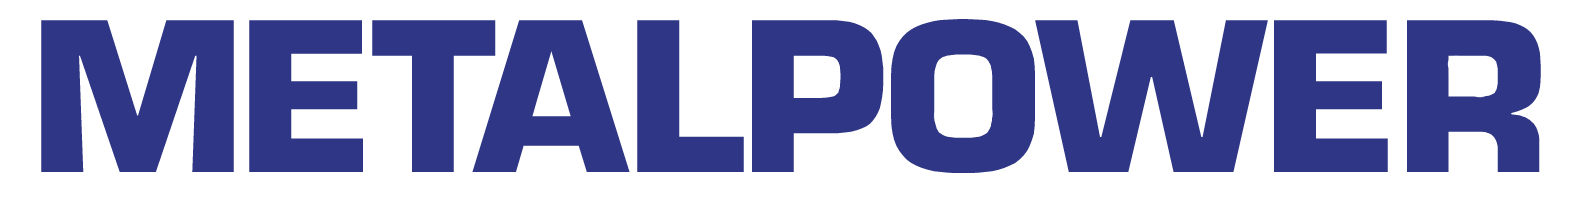 Metalpower_logo